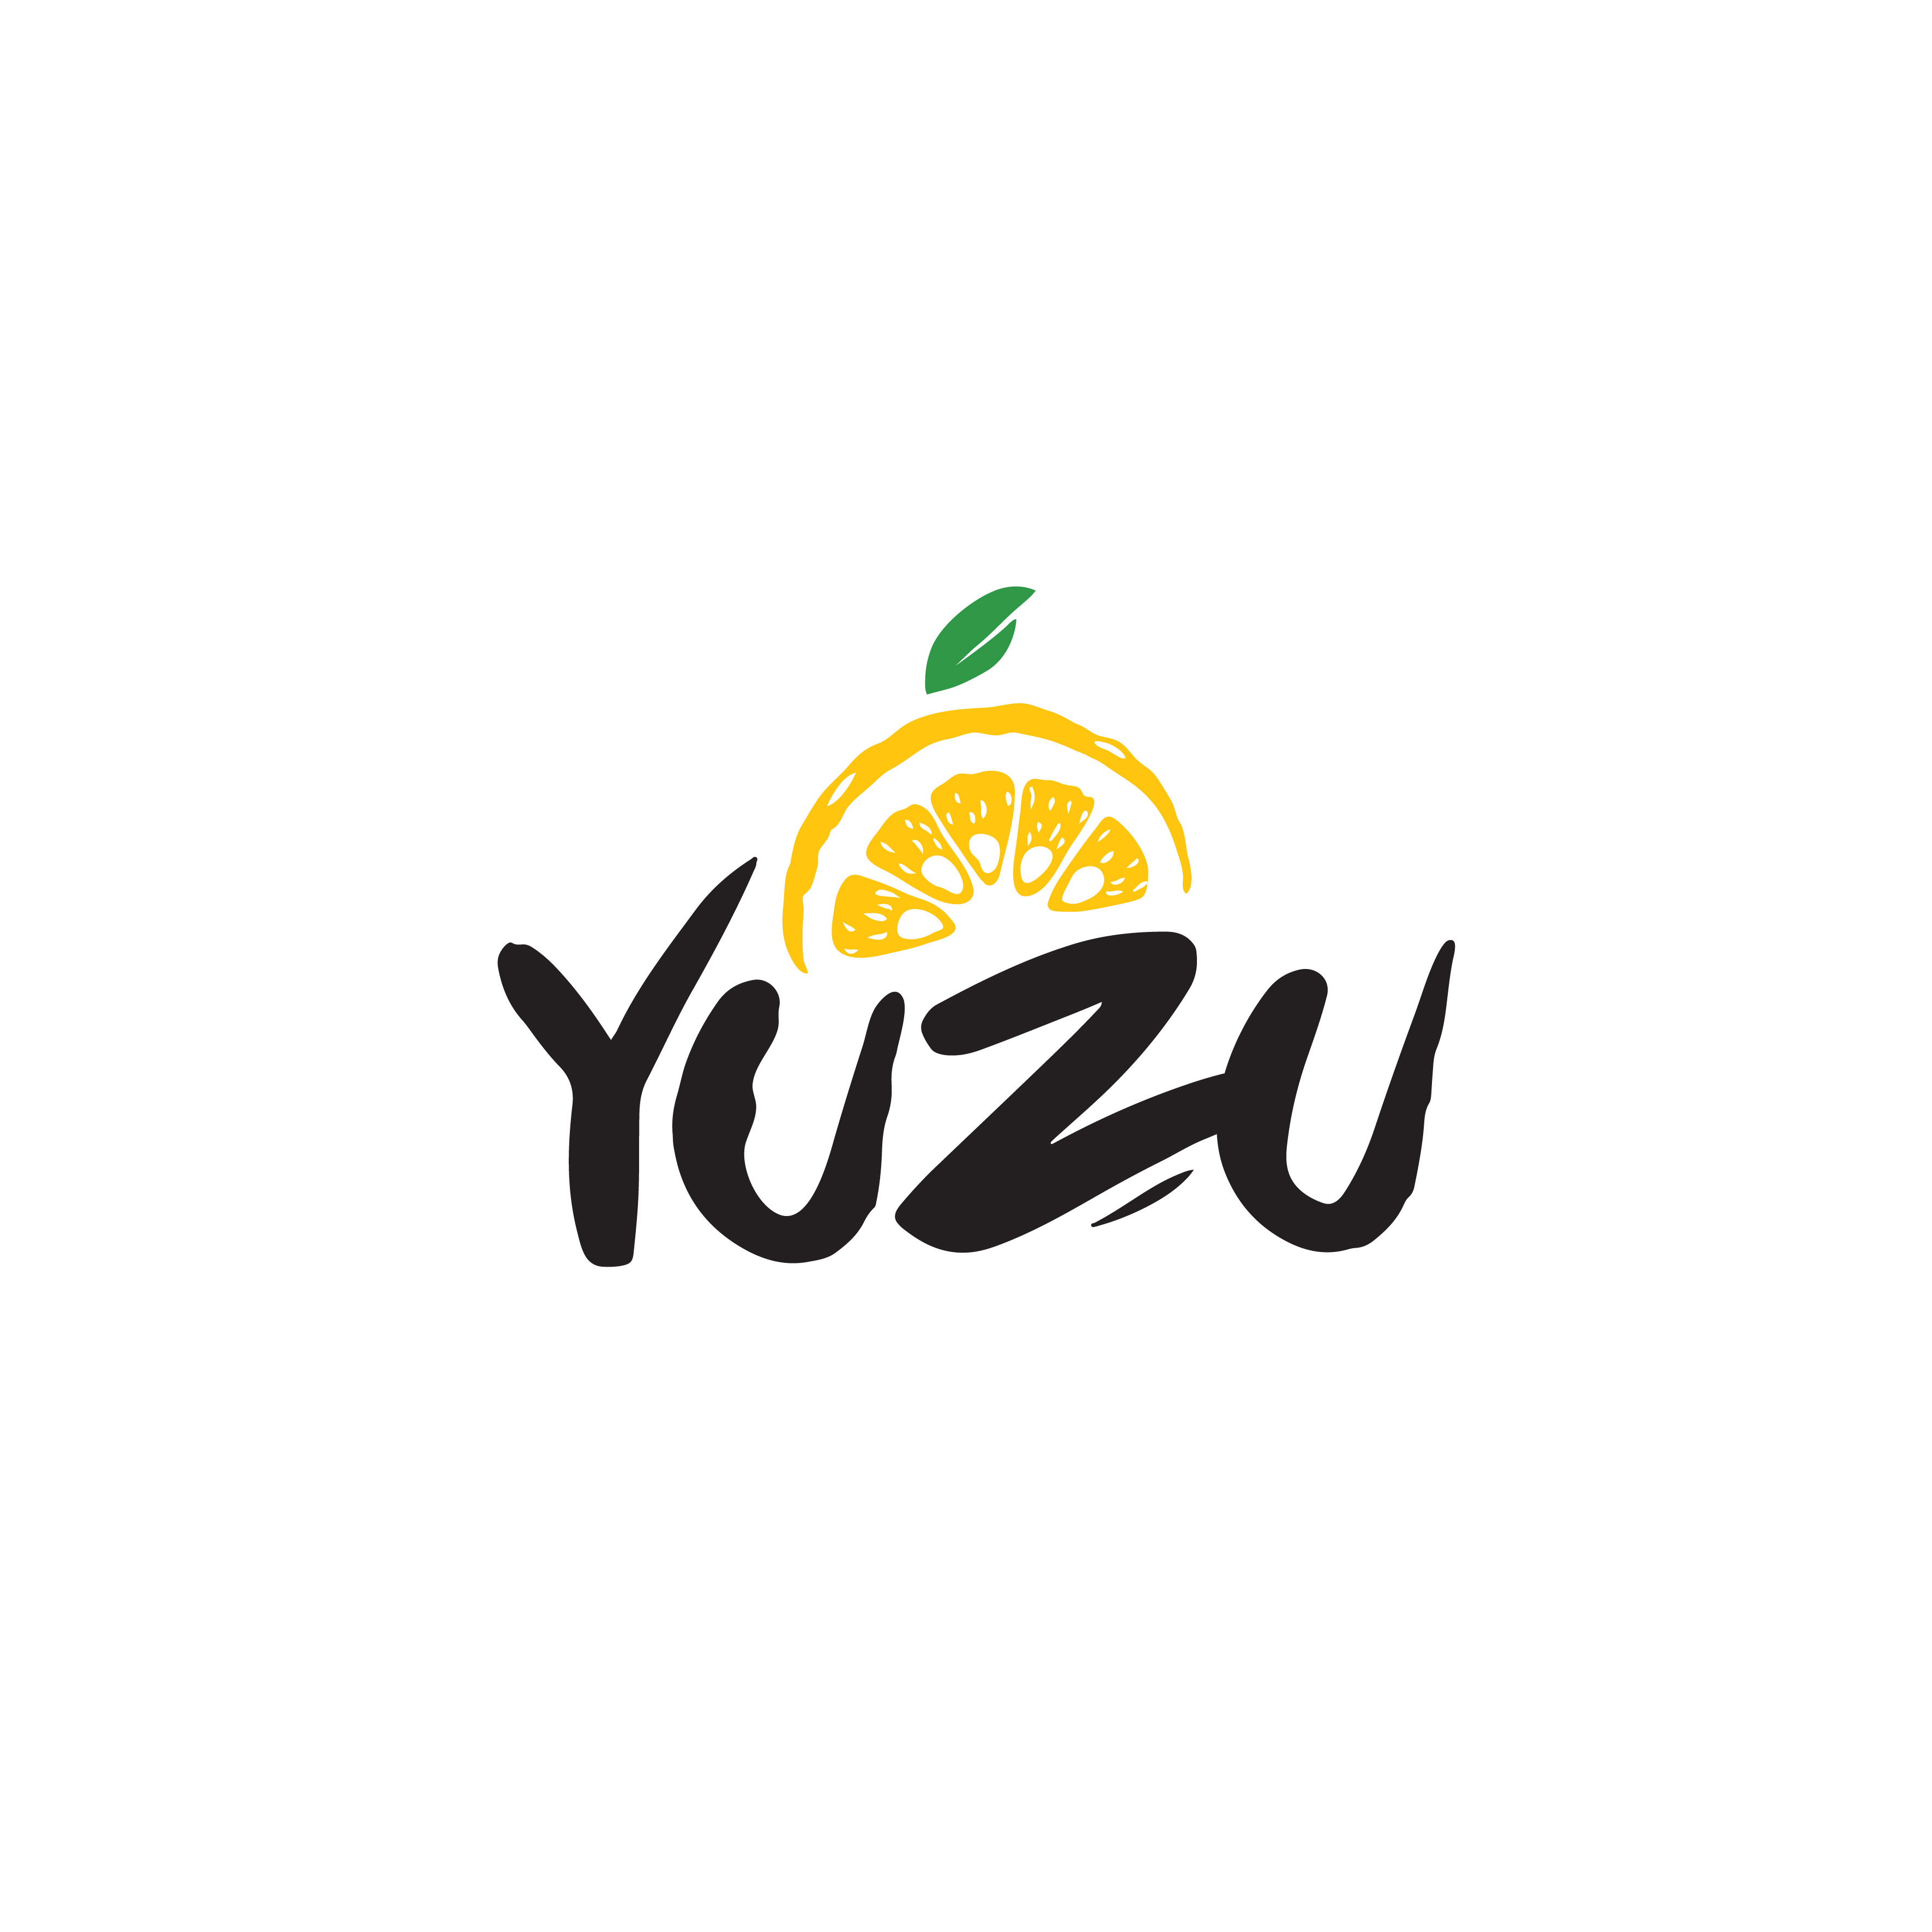 Yuzu lemon